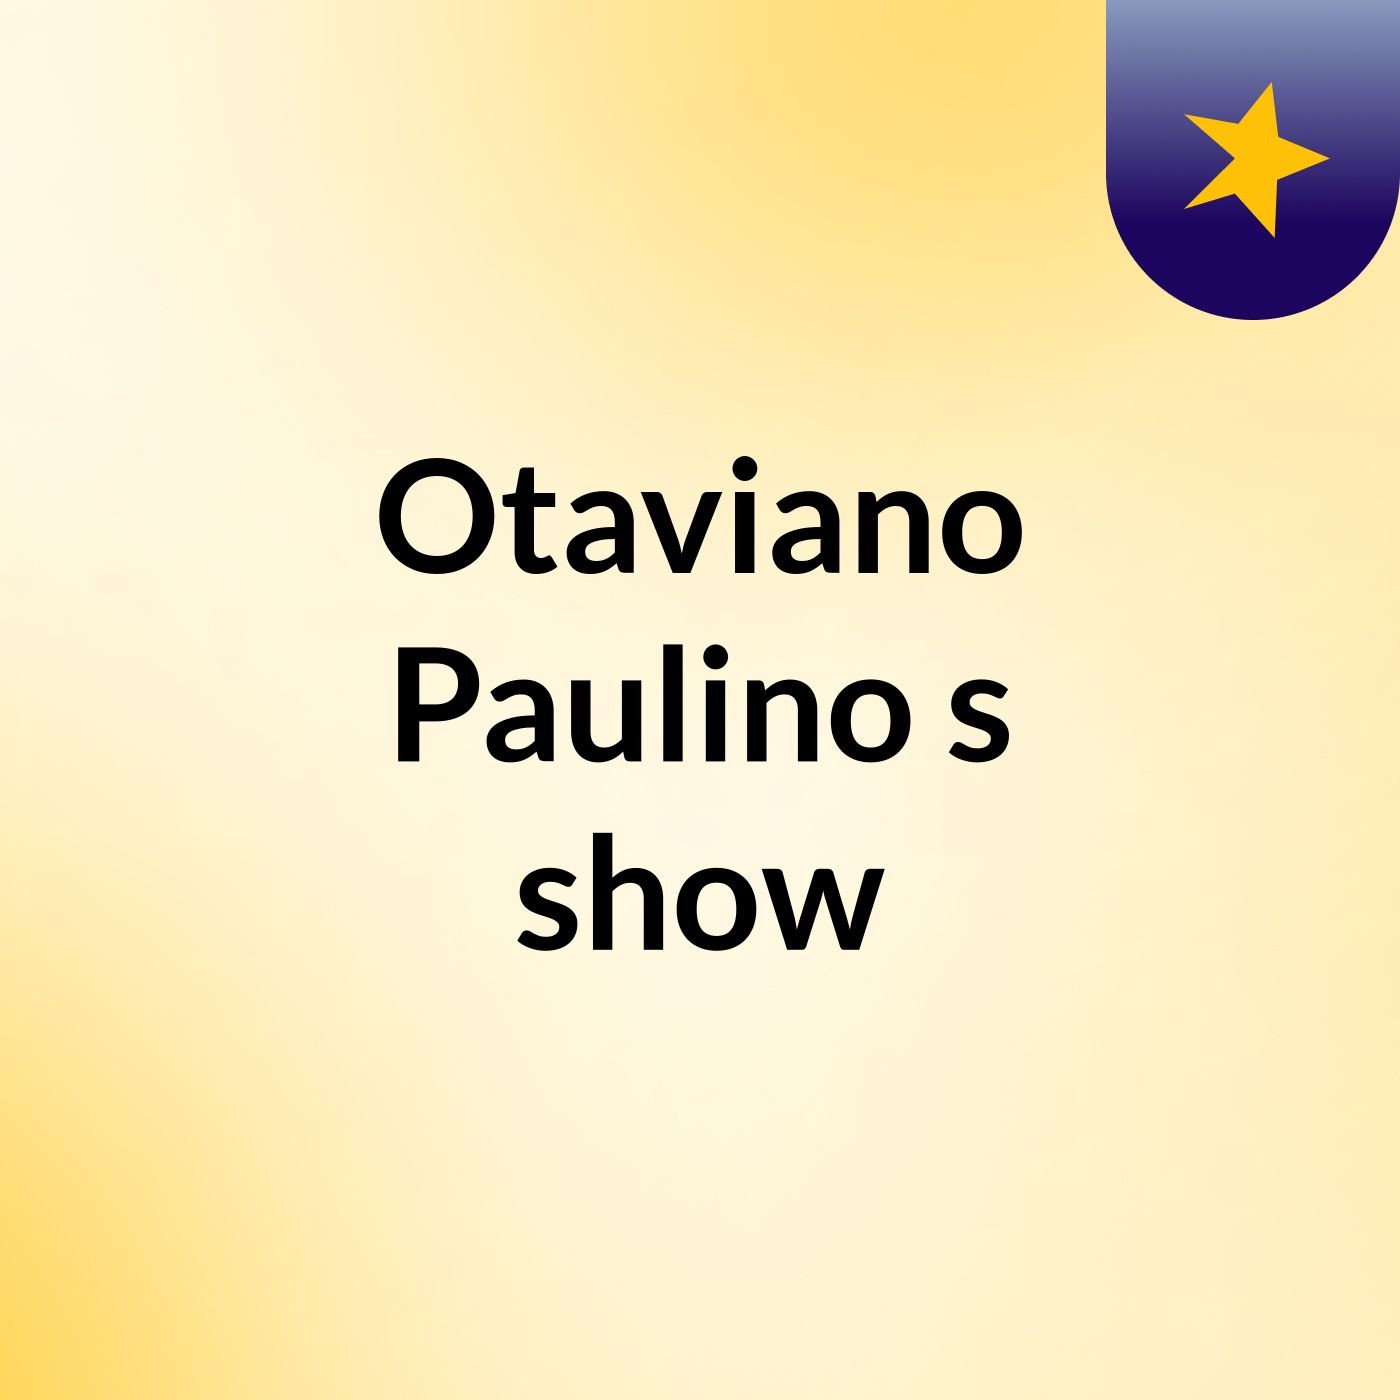 Episódio 19 - Otaviano Paulino's show